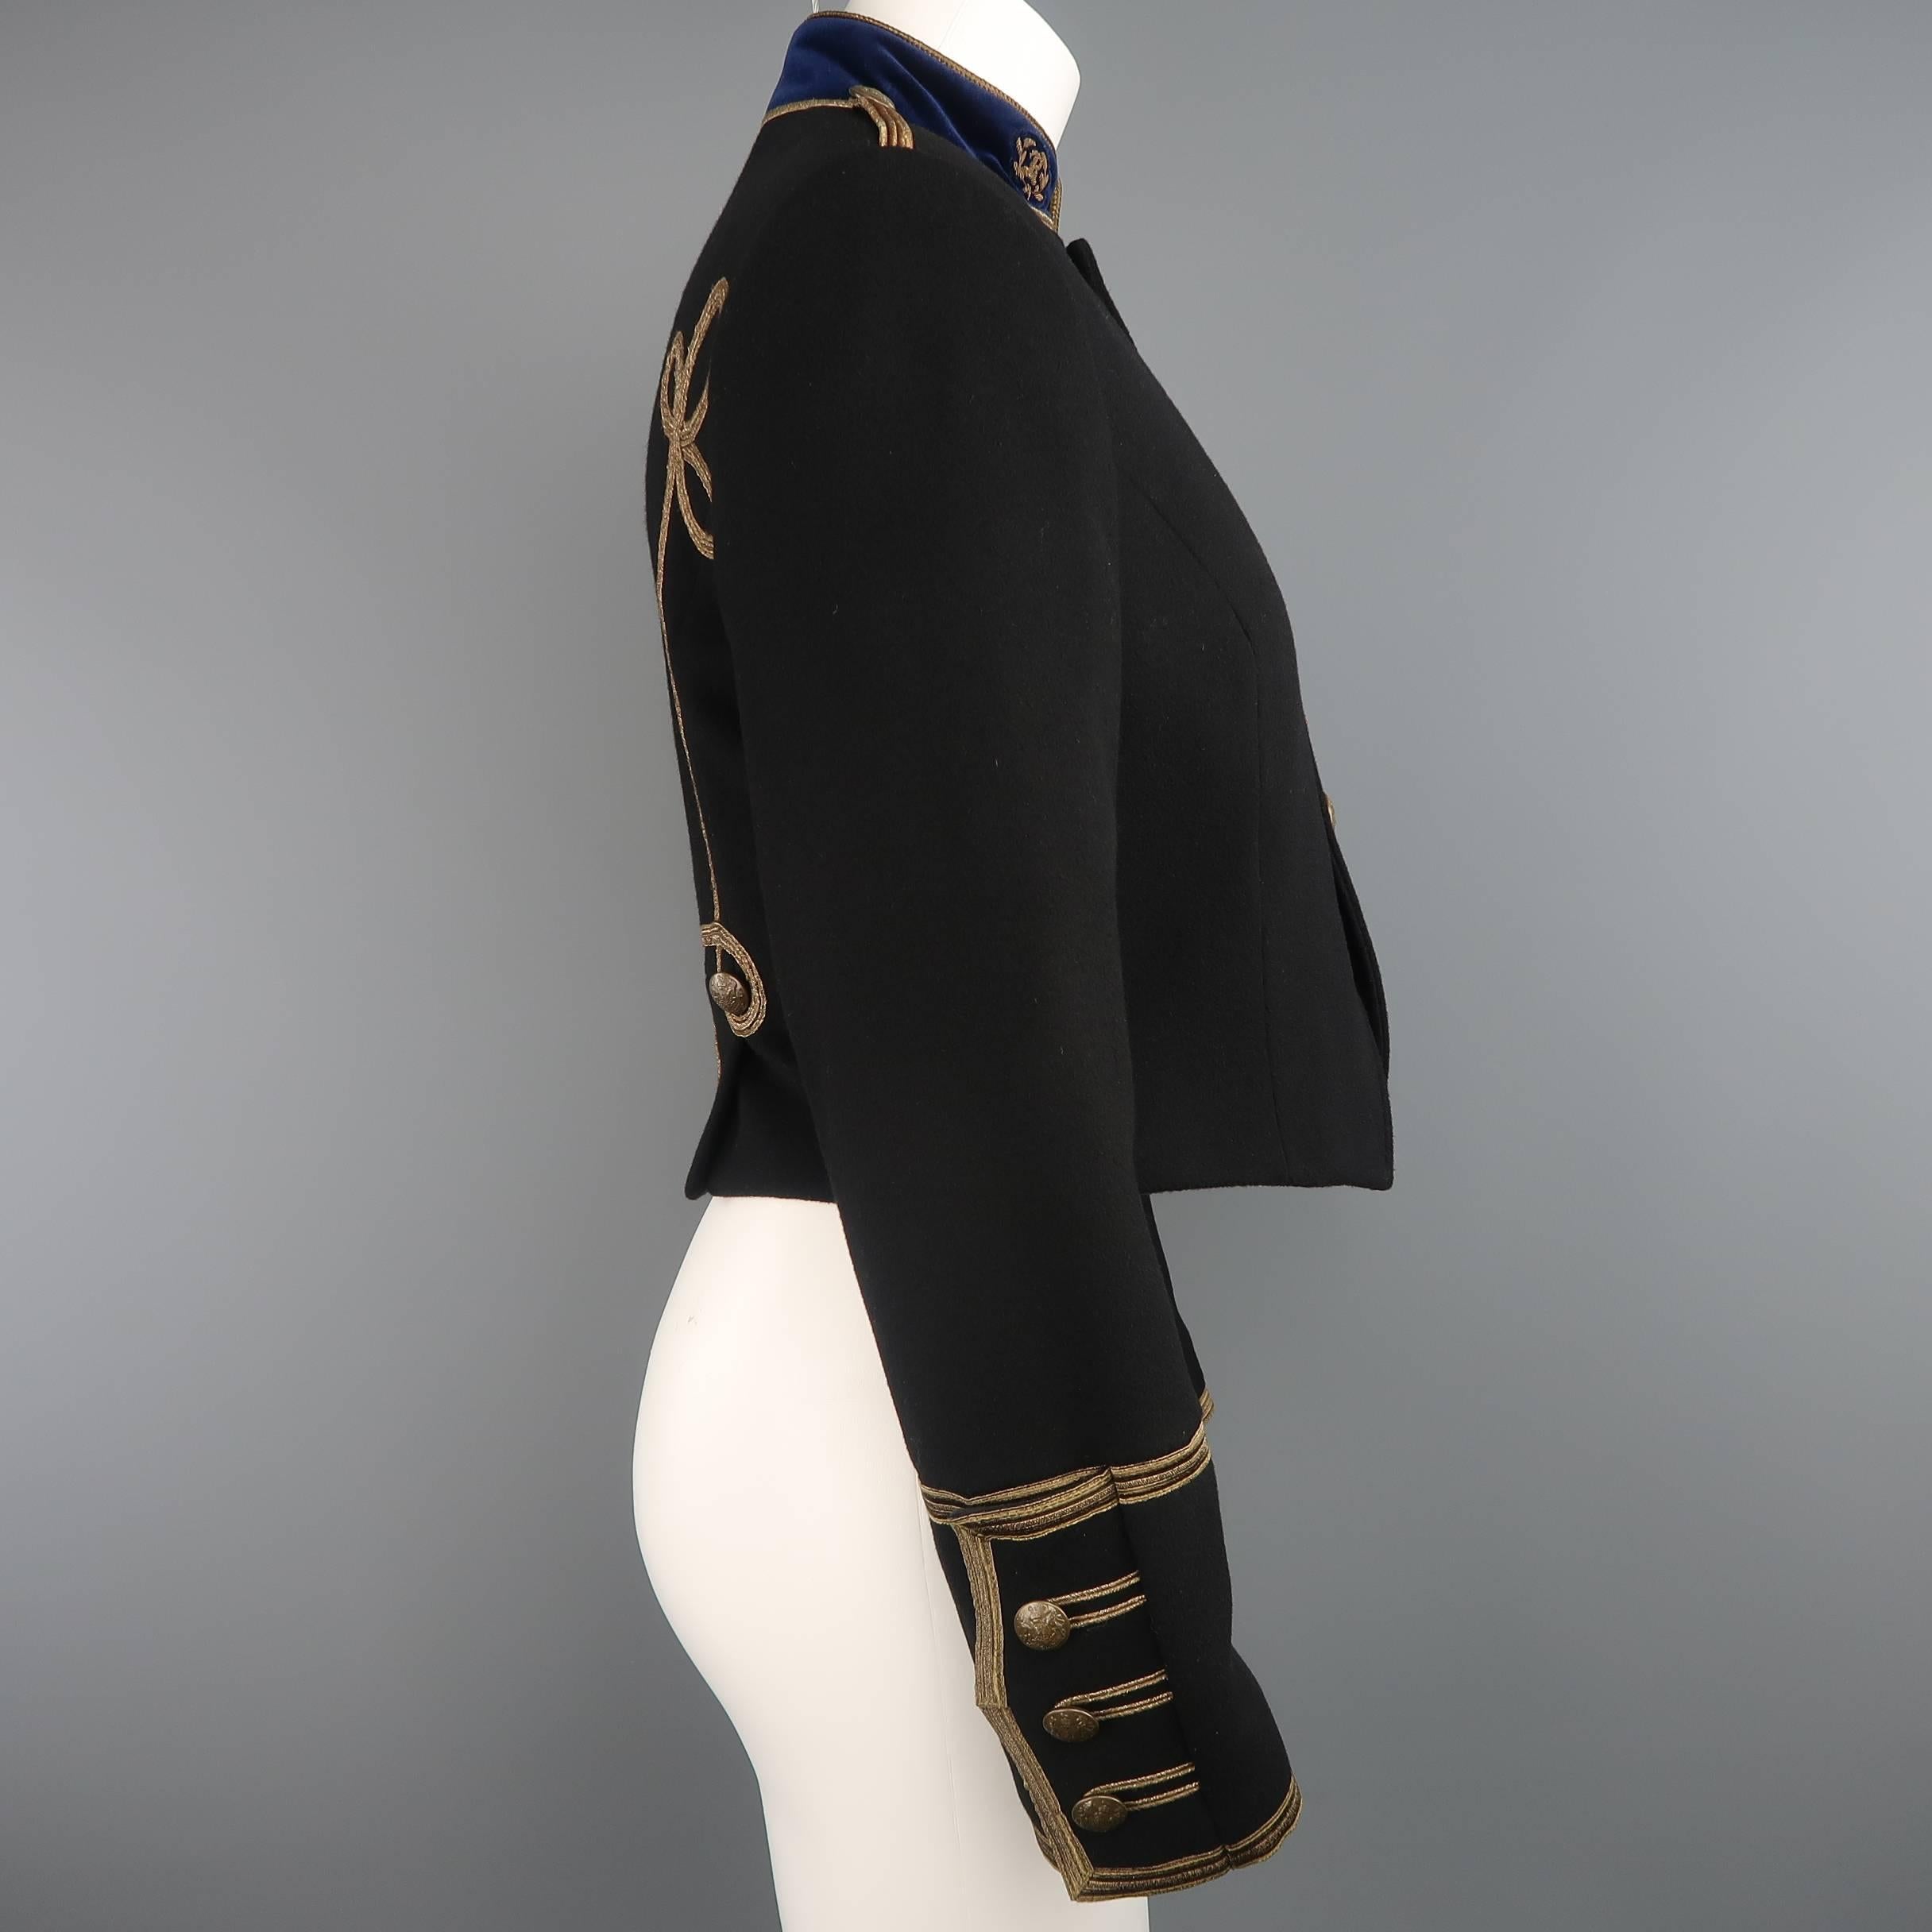 velvet collared coat with hidden buttons